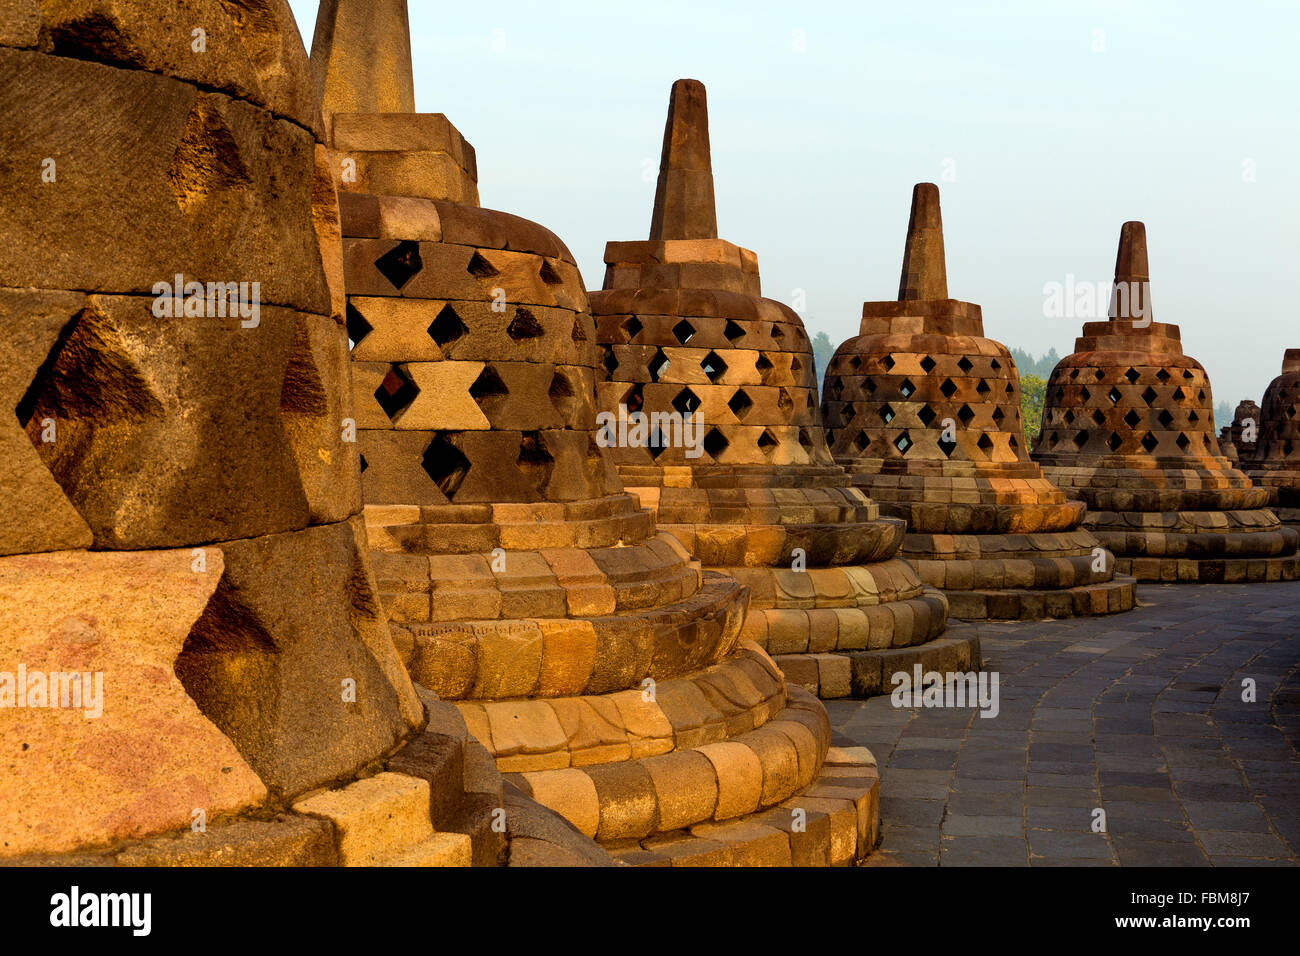 La hermosa stupas del complejo del templo de Borobudur, Yogyakarta, Indonesia. Foto de stock